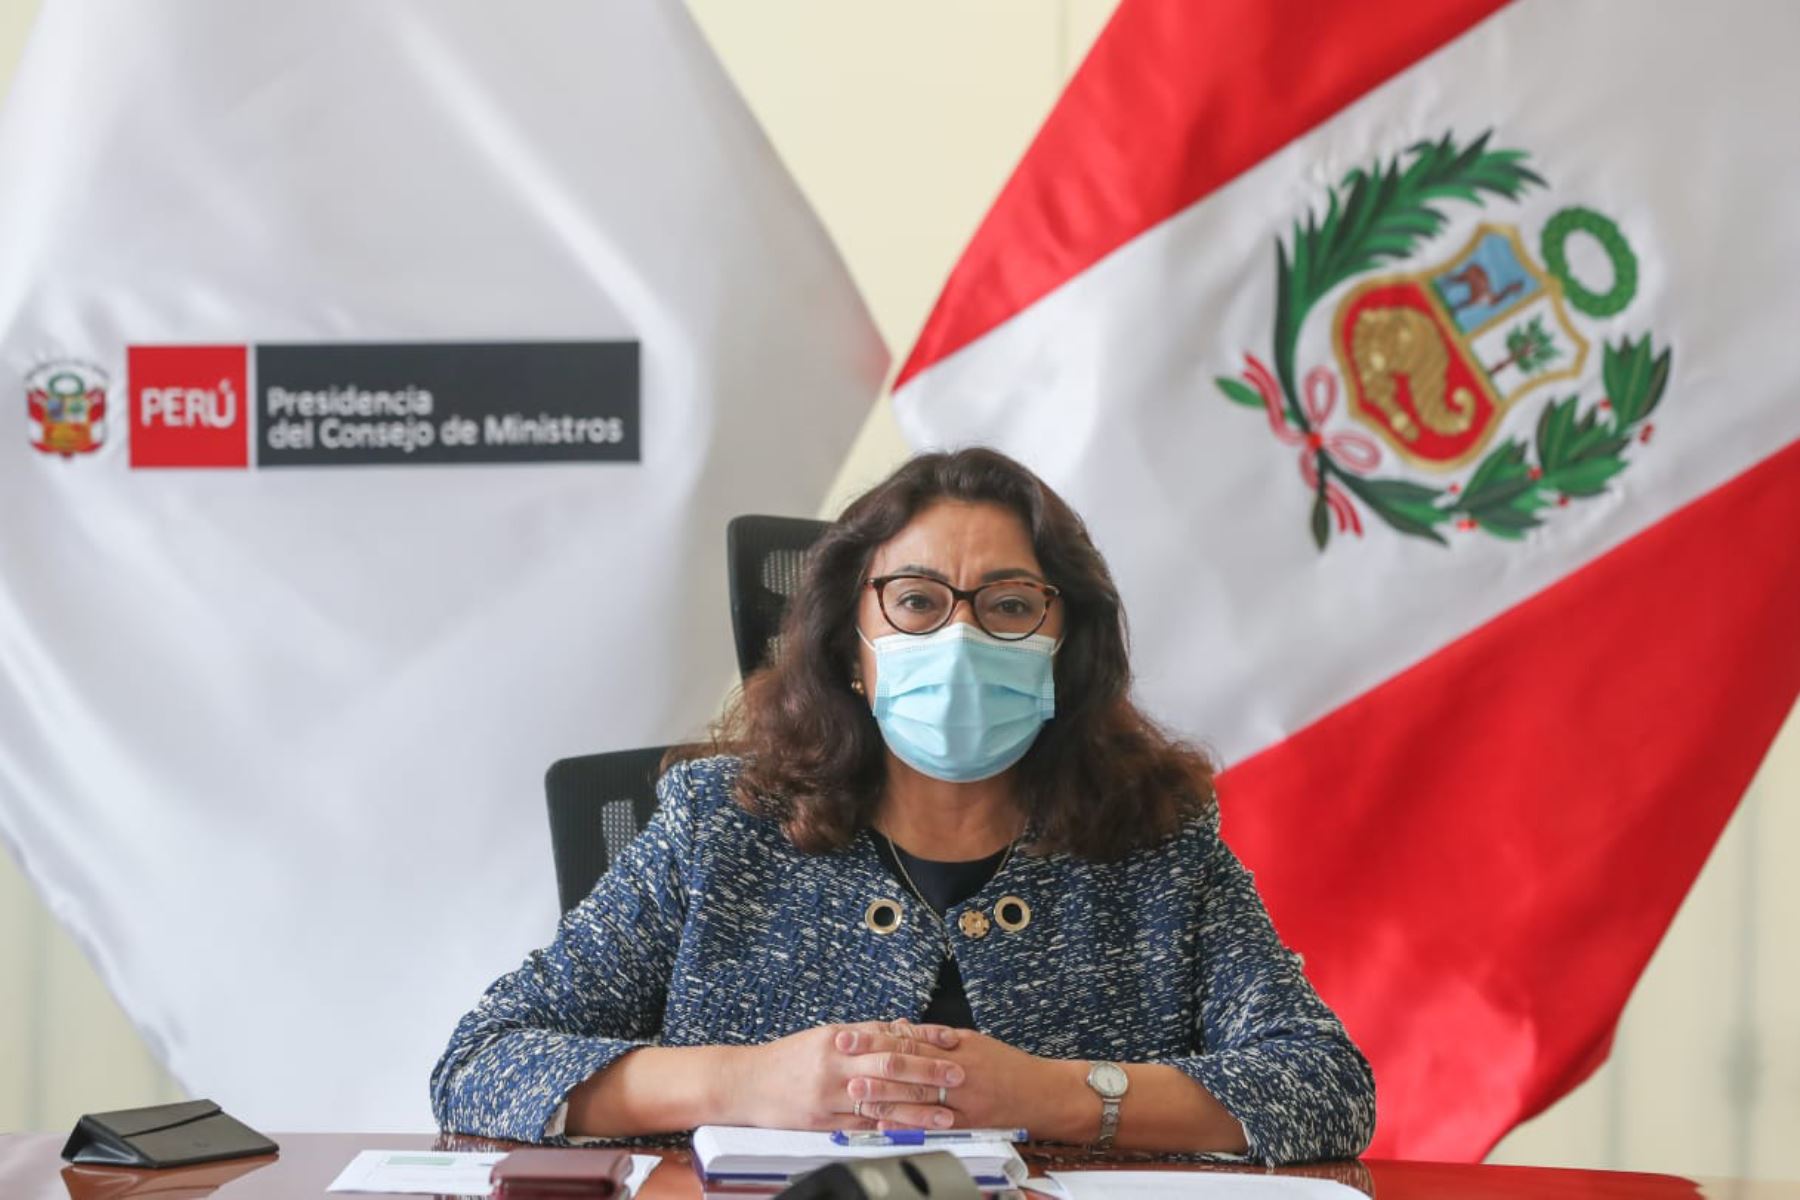 Prime Minister Violeta Bermudez. Photo: Presidency of the Council of Ministers (PCM).